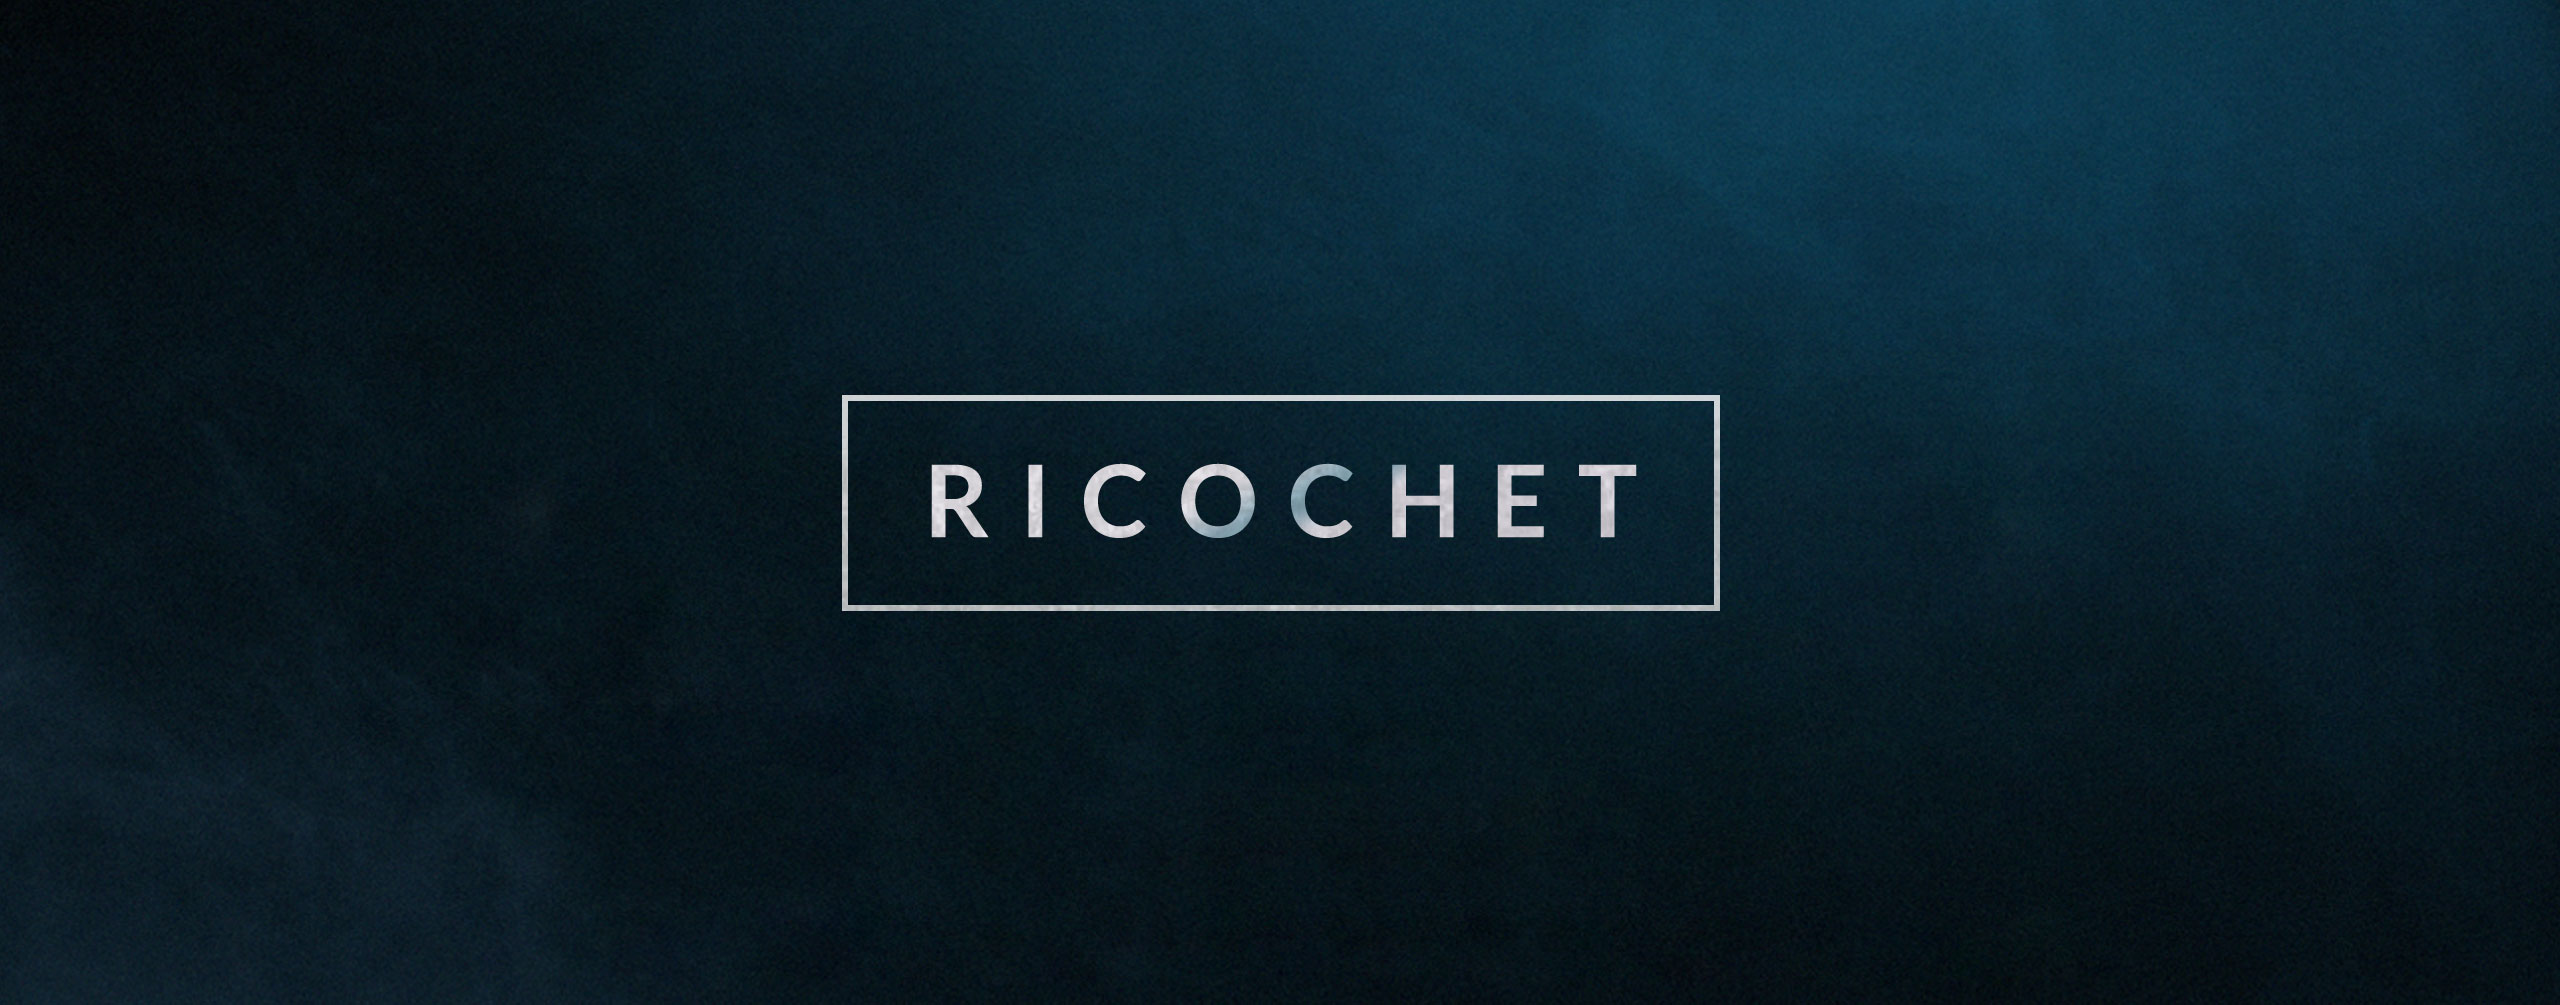 ricochet definition examples